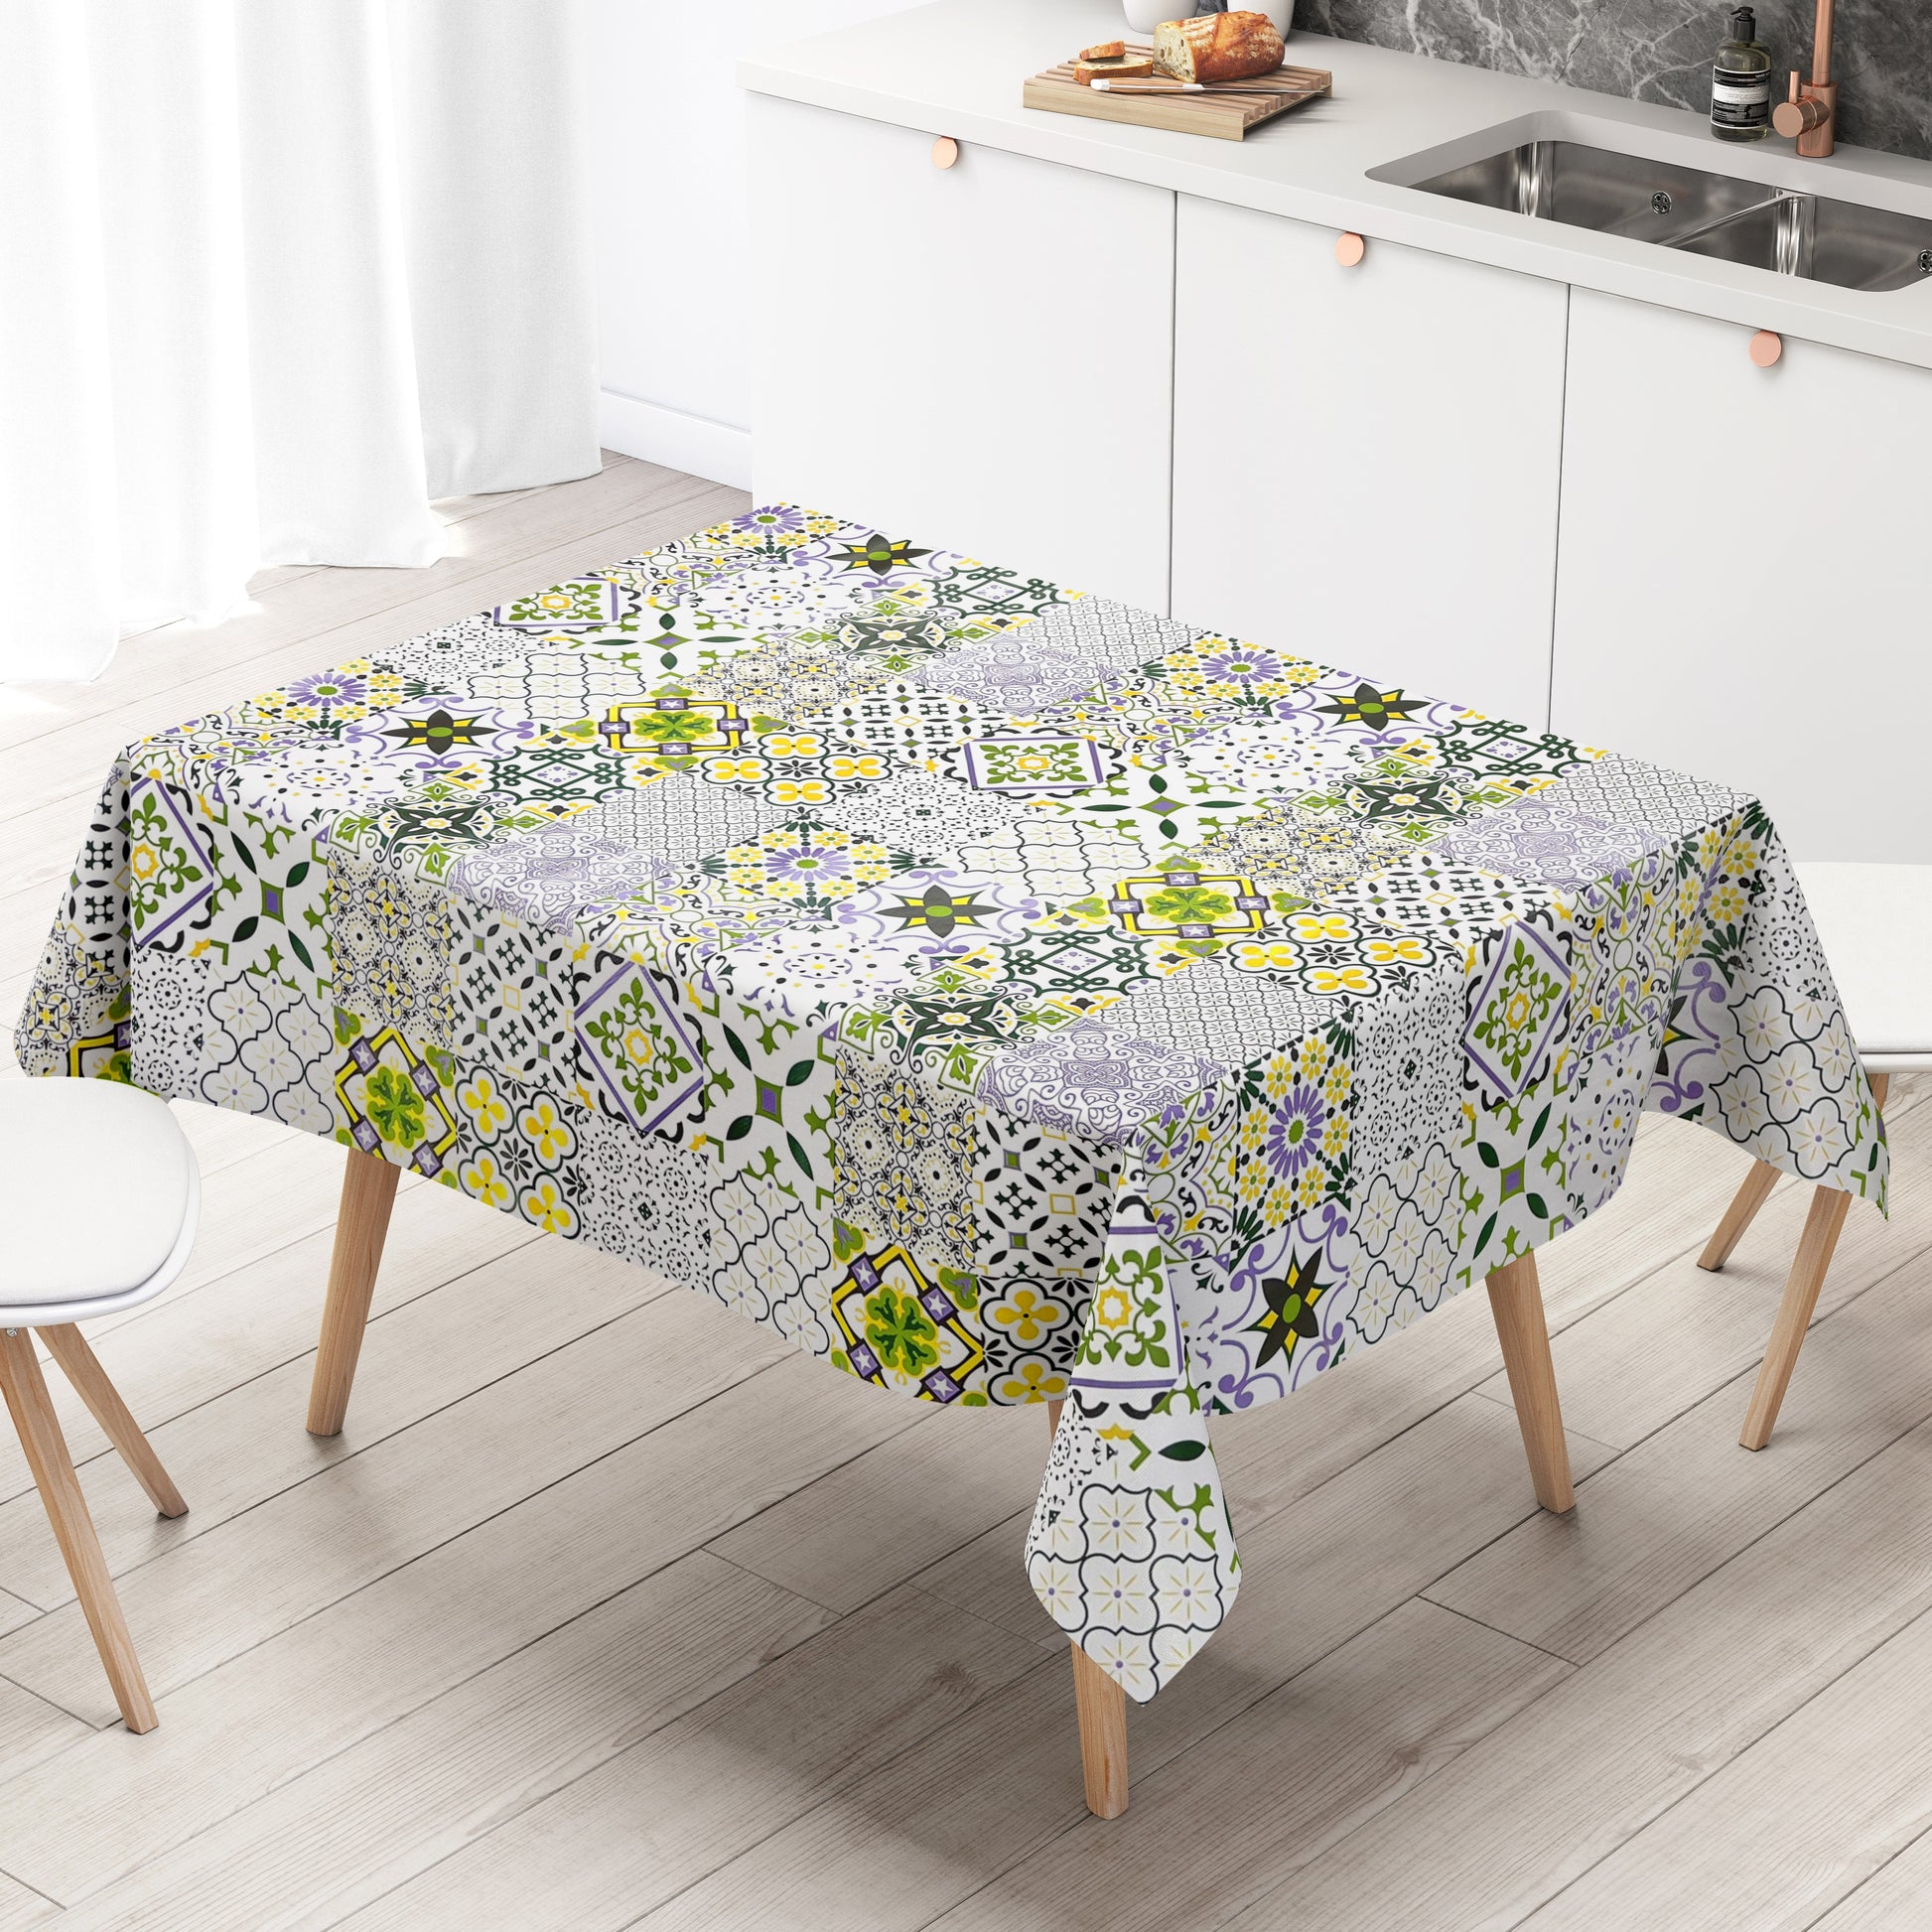 Wachstuch Tischdecke Fliesen lila grün gelb Mosaik